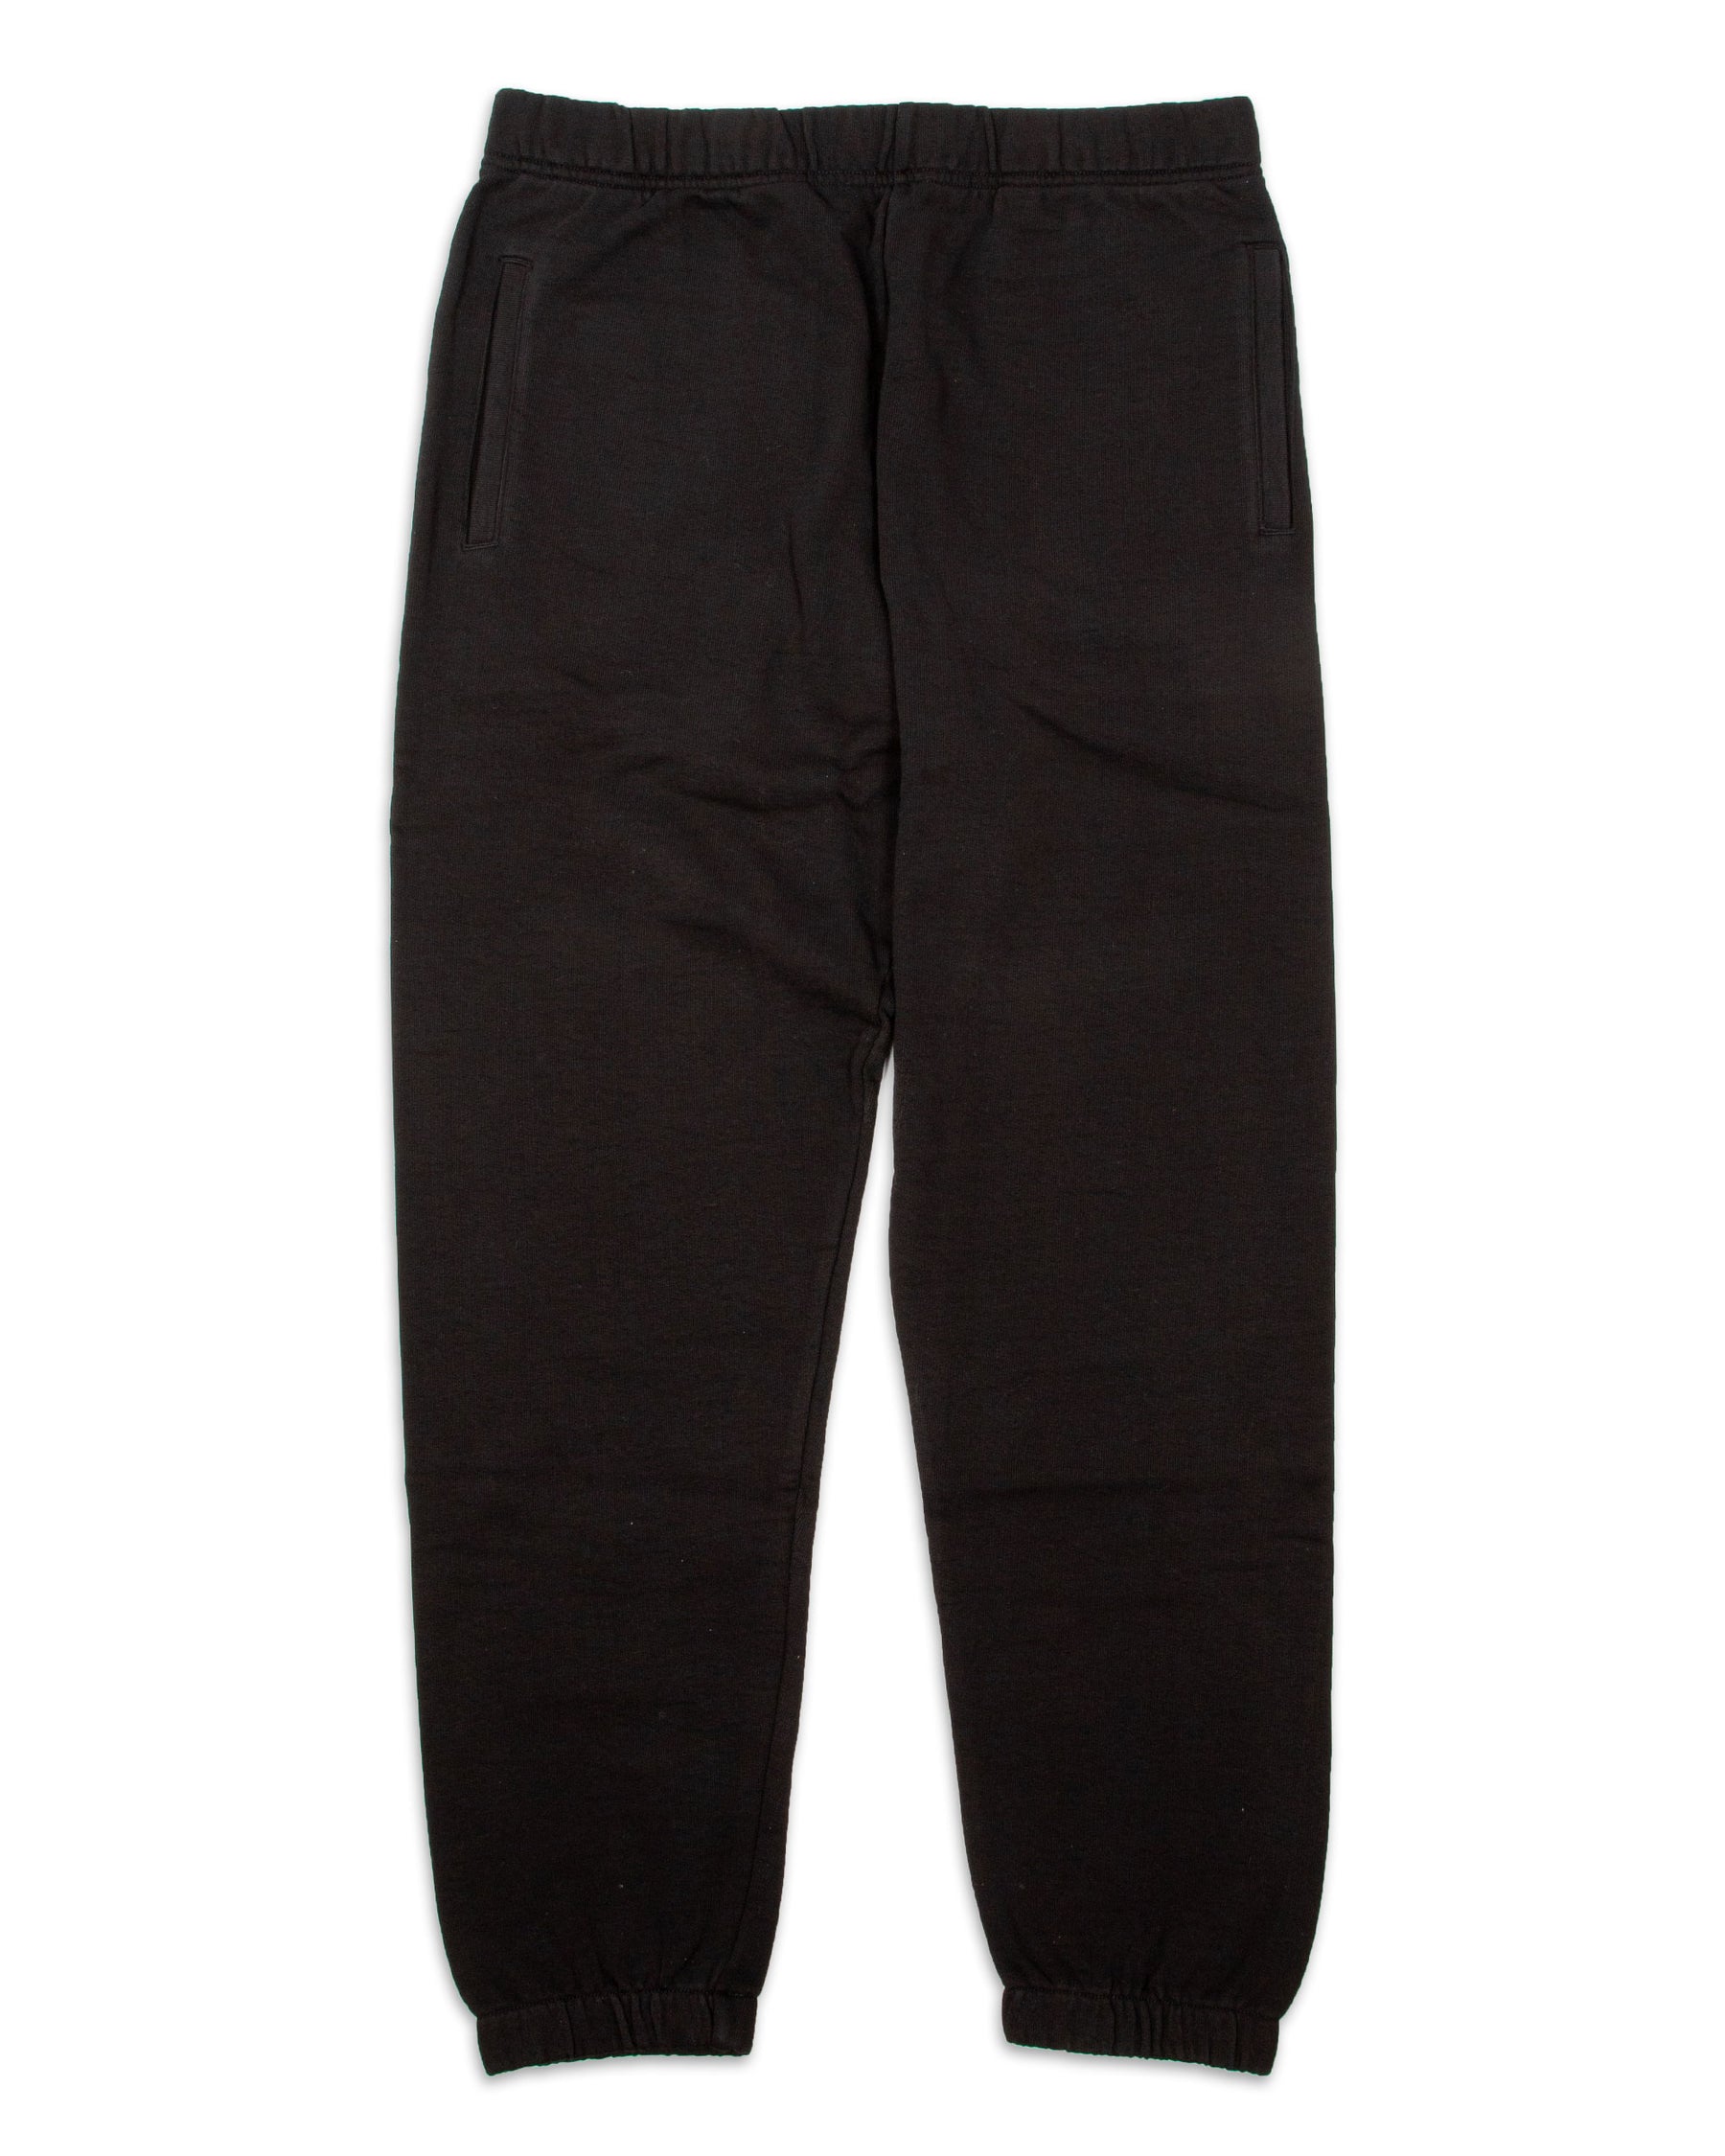 Pocket Sweat Pant Black I027697-89XX